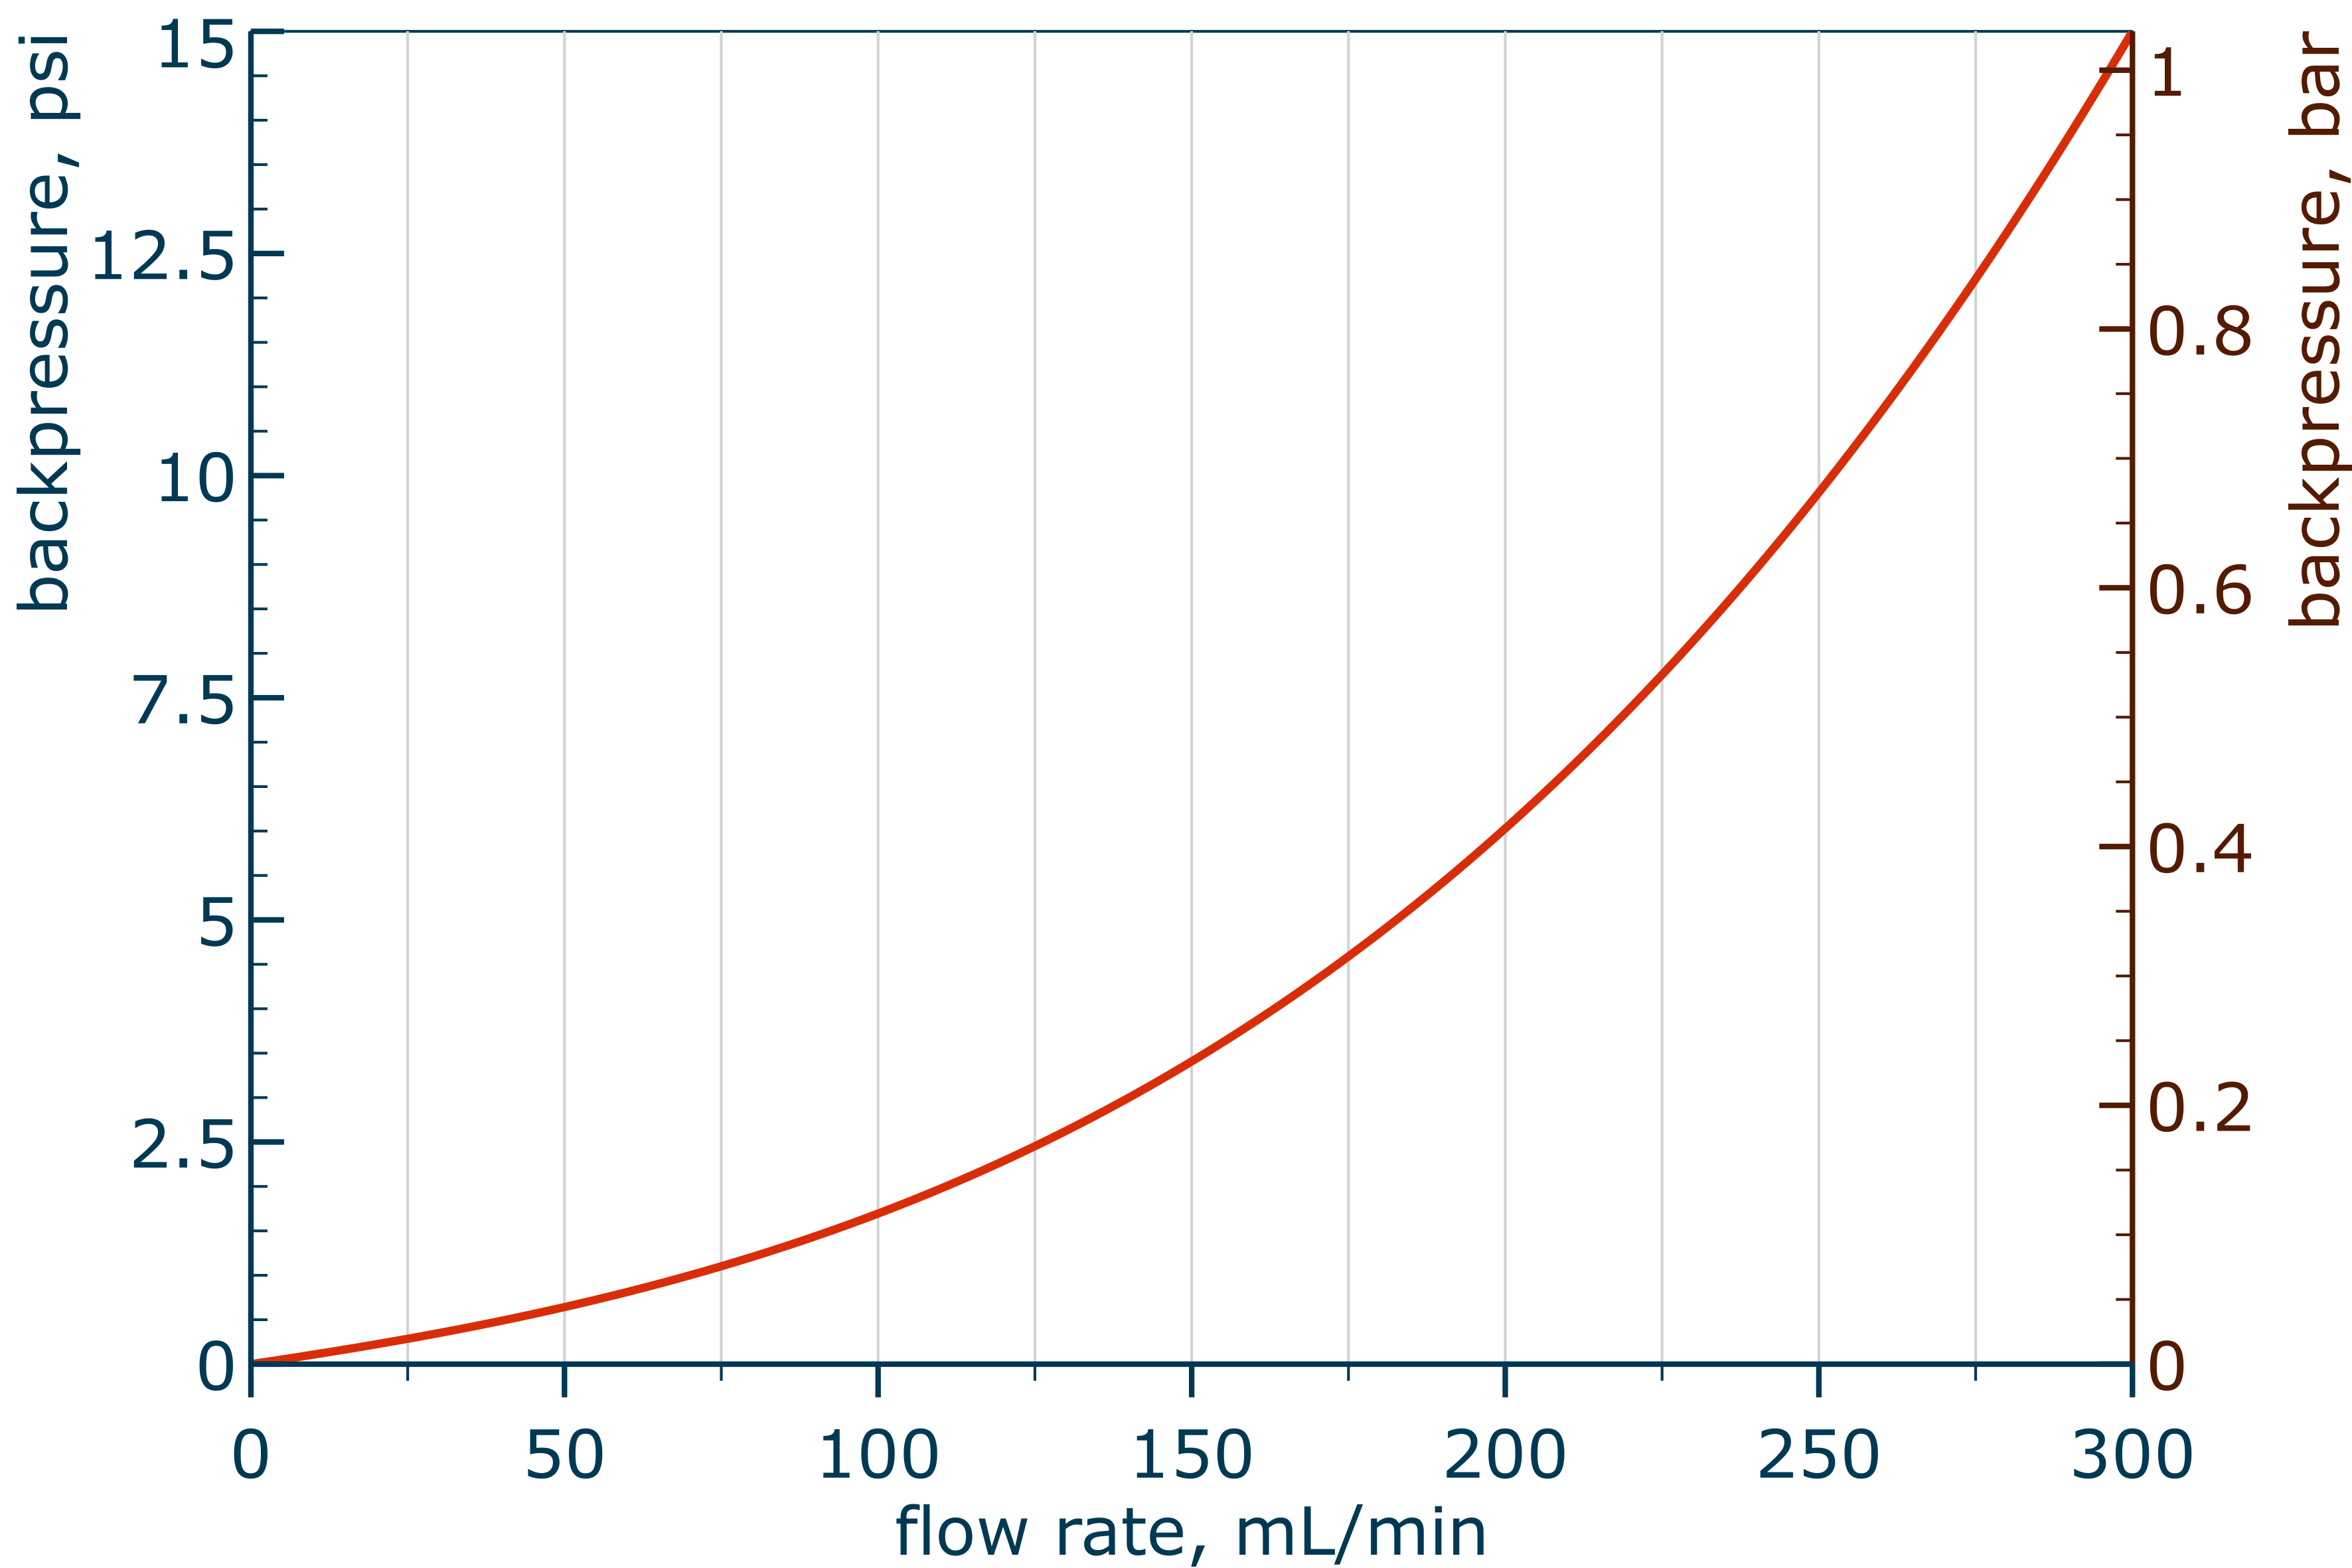 RD chromatography detectors back-pressure graph